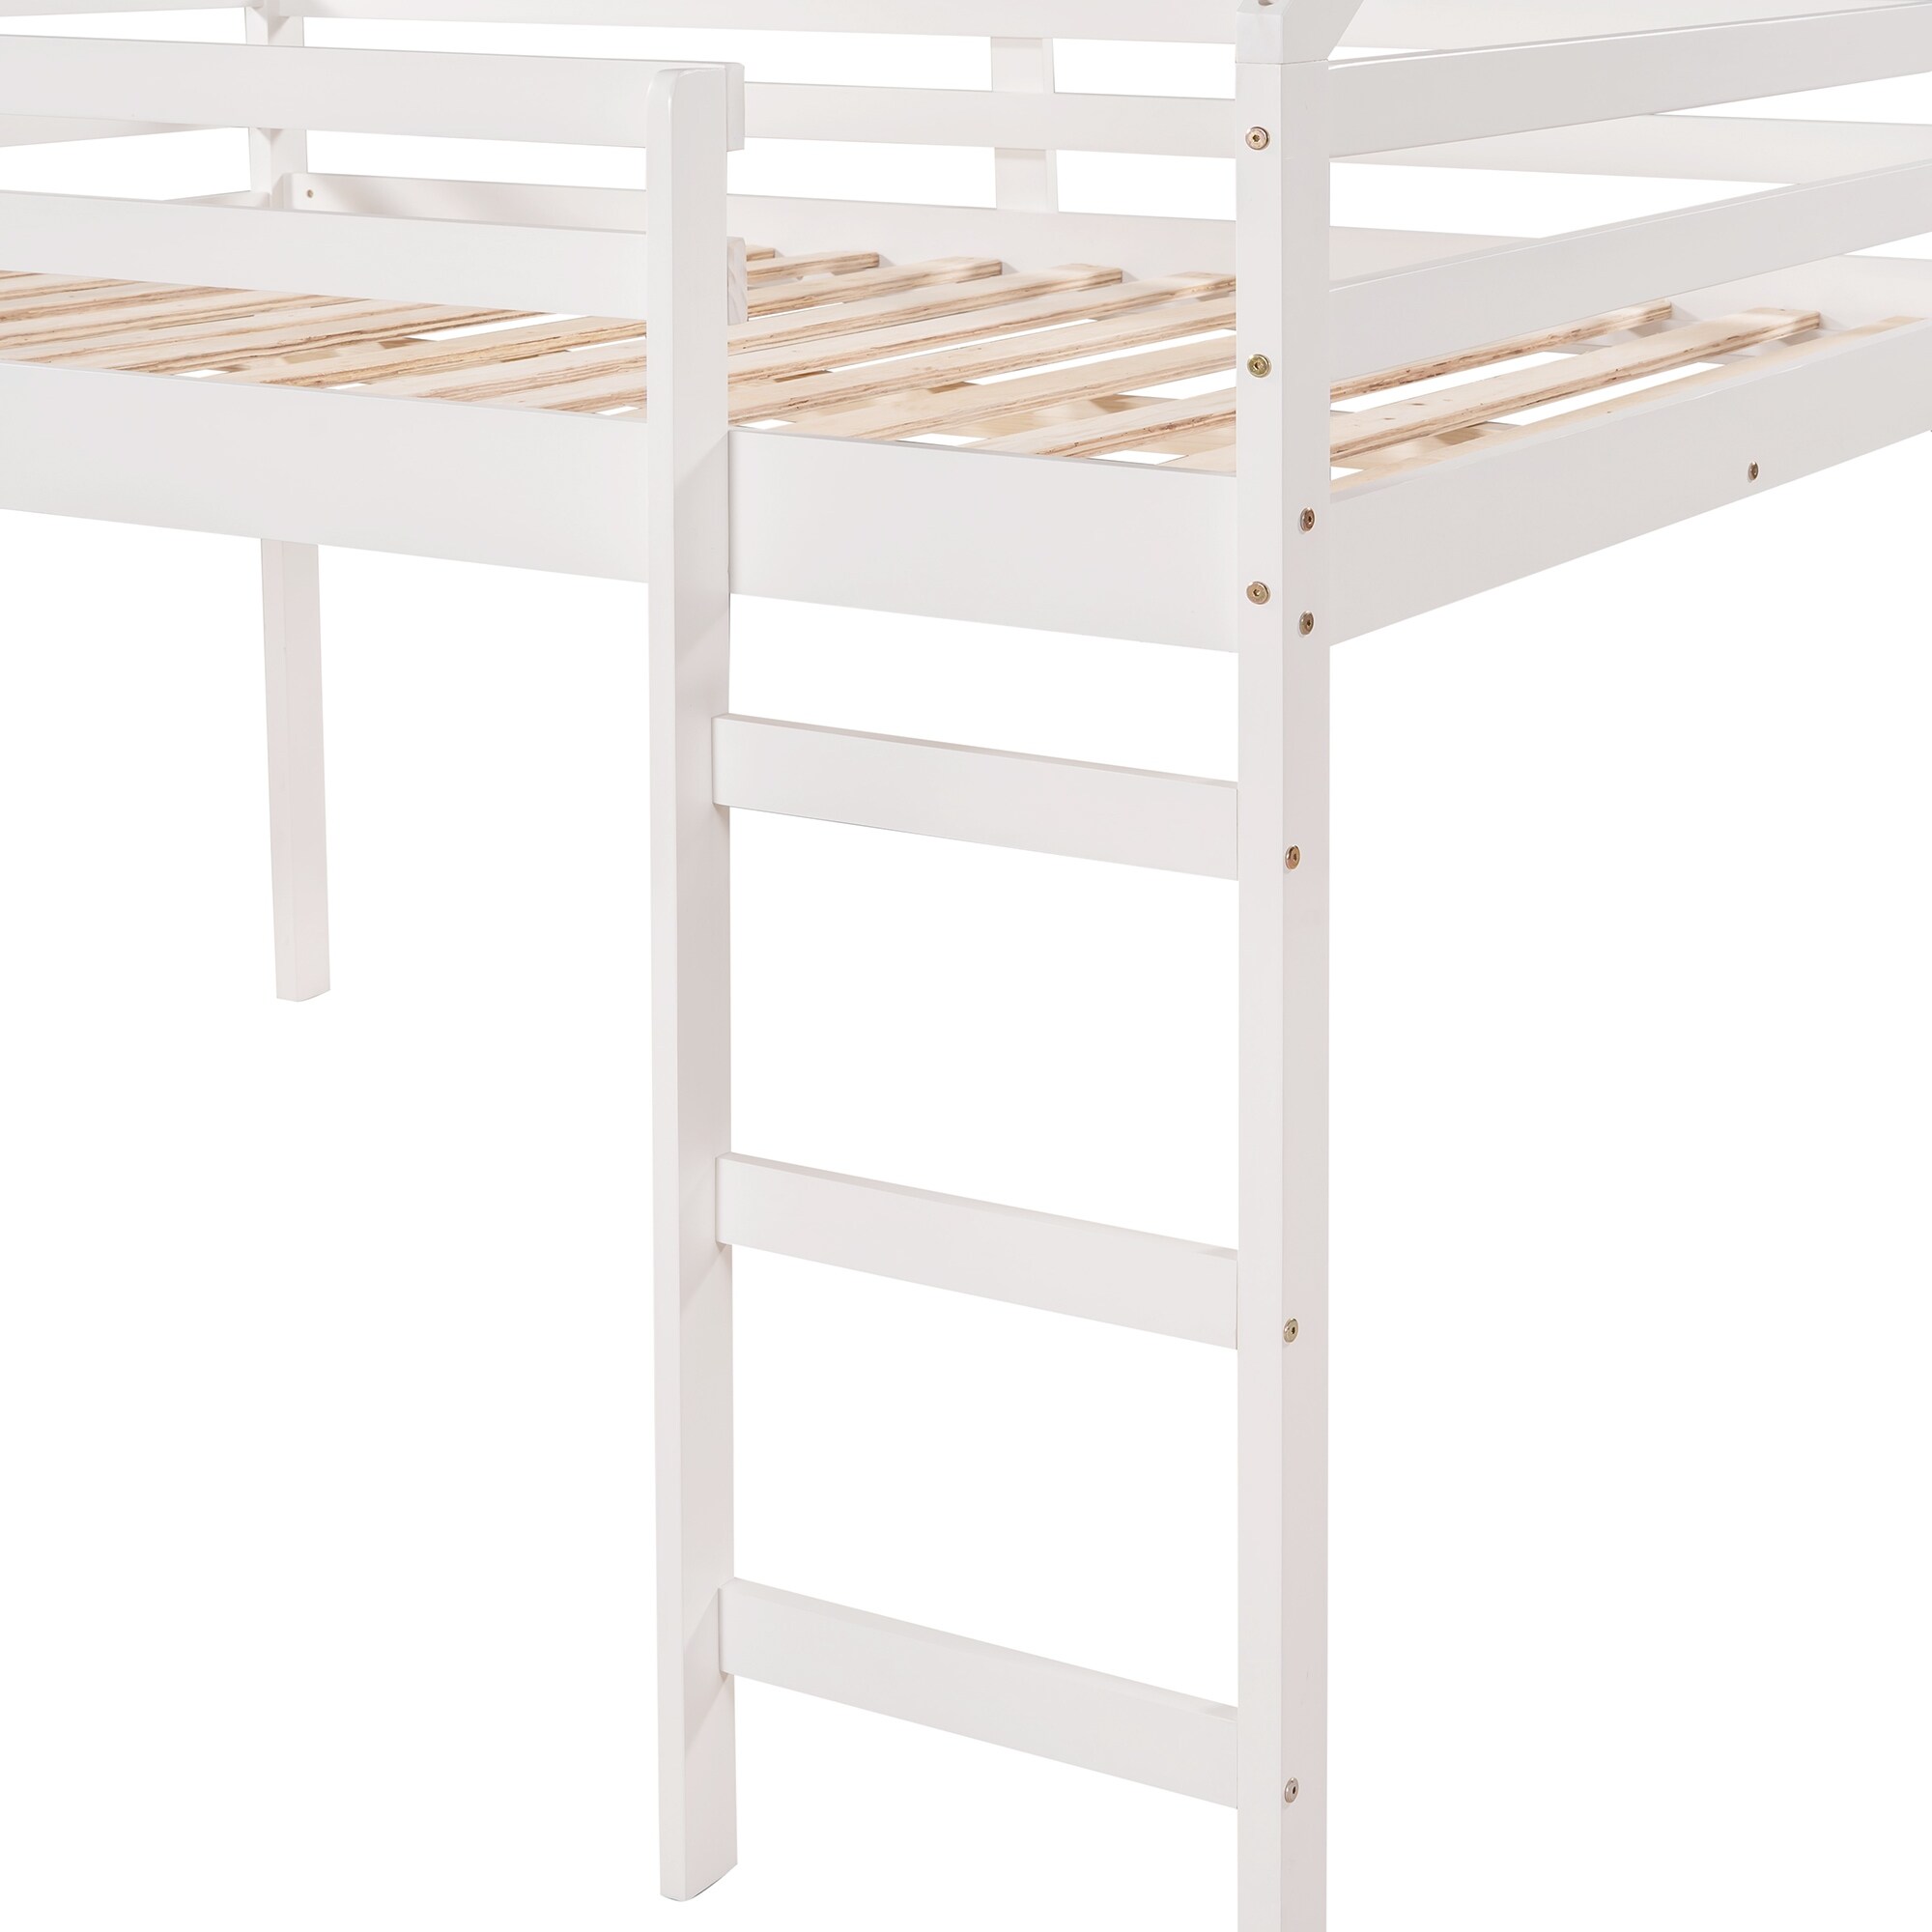 Full Wooden Kids House Loft Bed with Slide, Ladder & Safety Guardrails